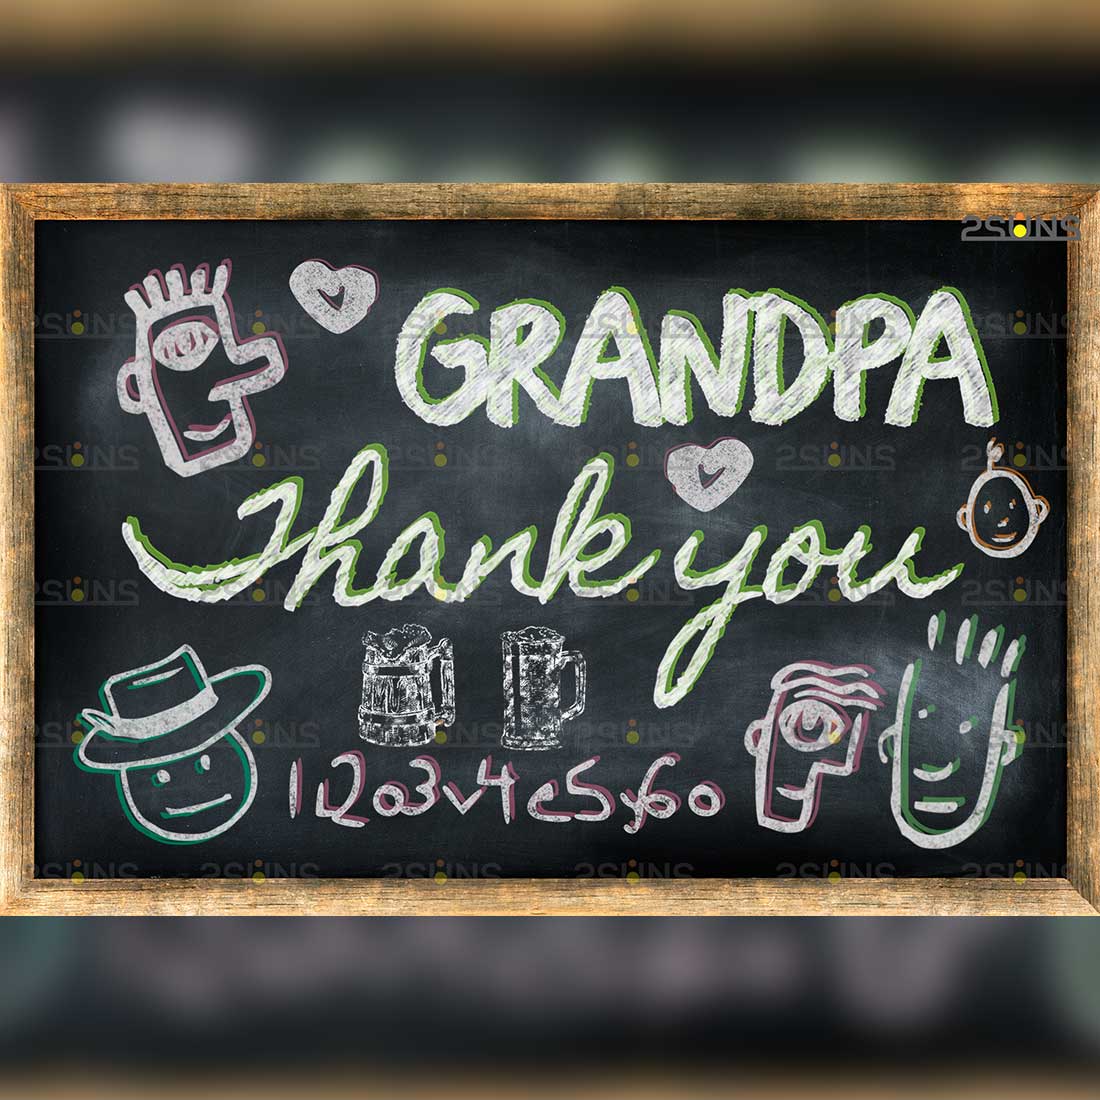 Fathers Day Sidewalk Chalkboard Art Overlay Grandpa.